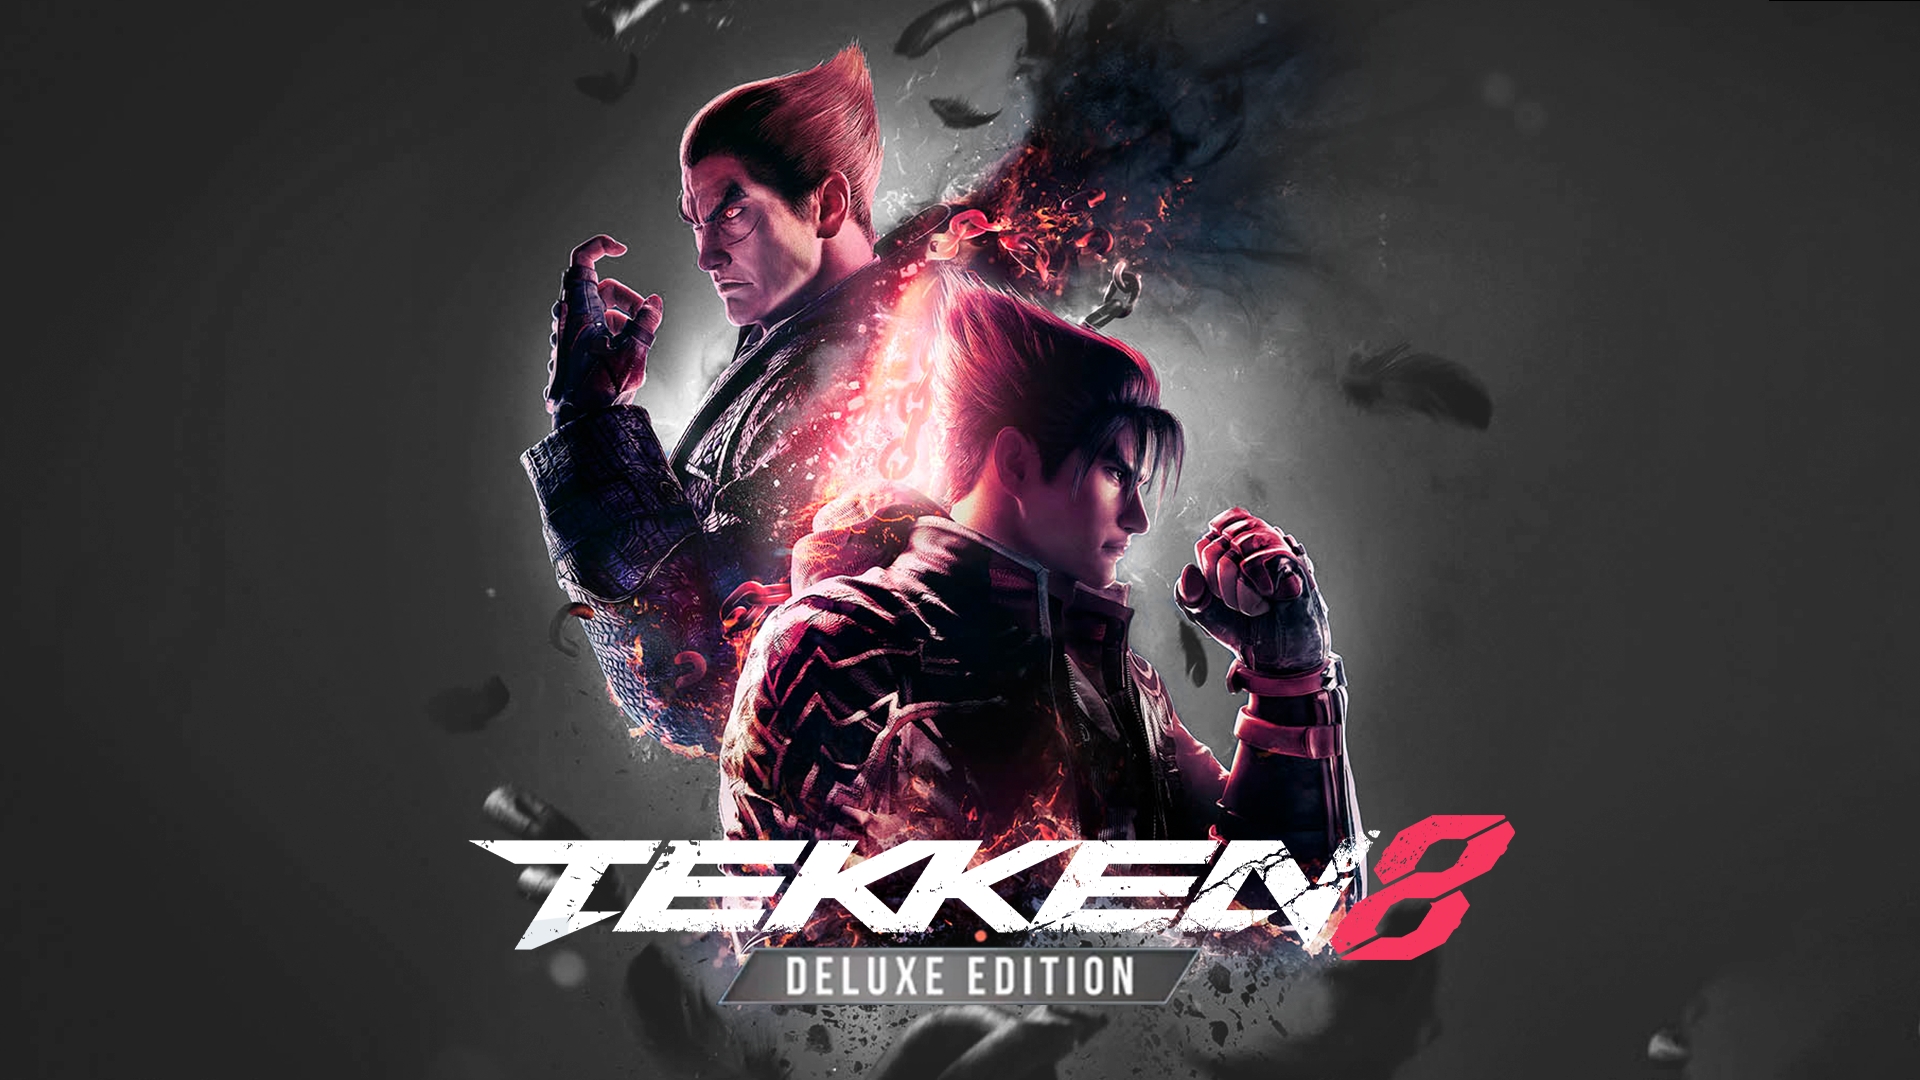 TEKKEN 8 - Ultimate Edition, PC Steam Game